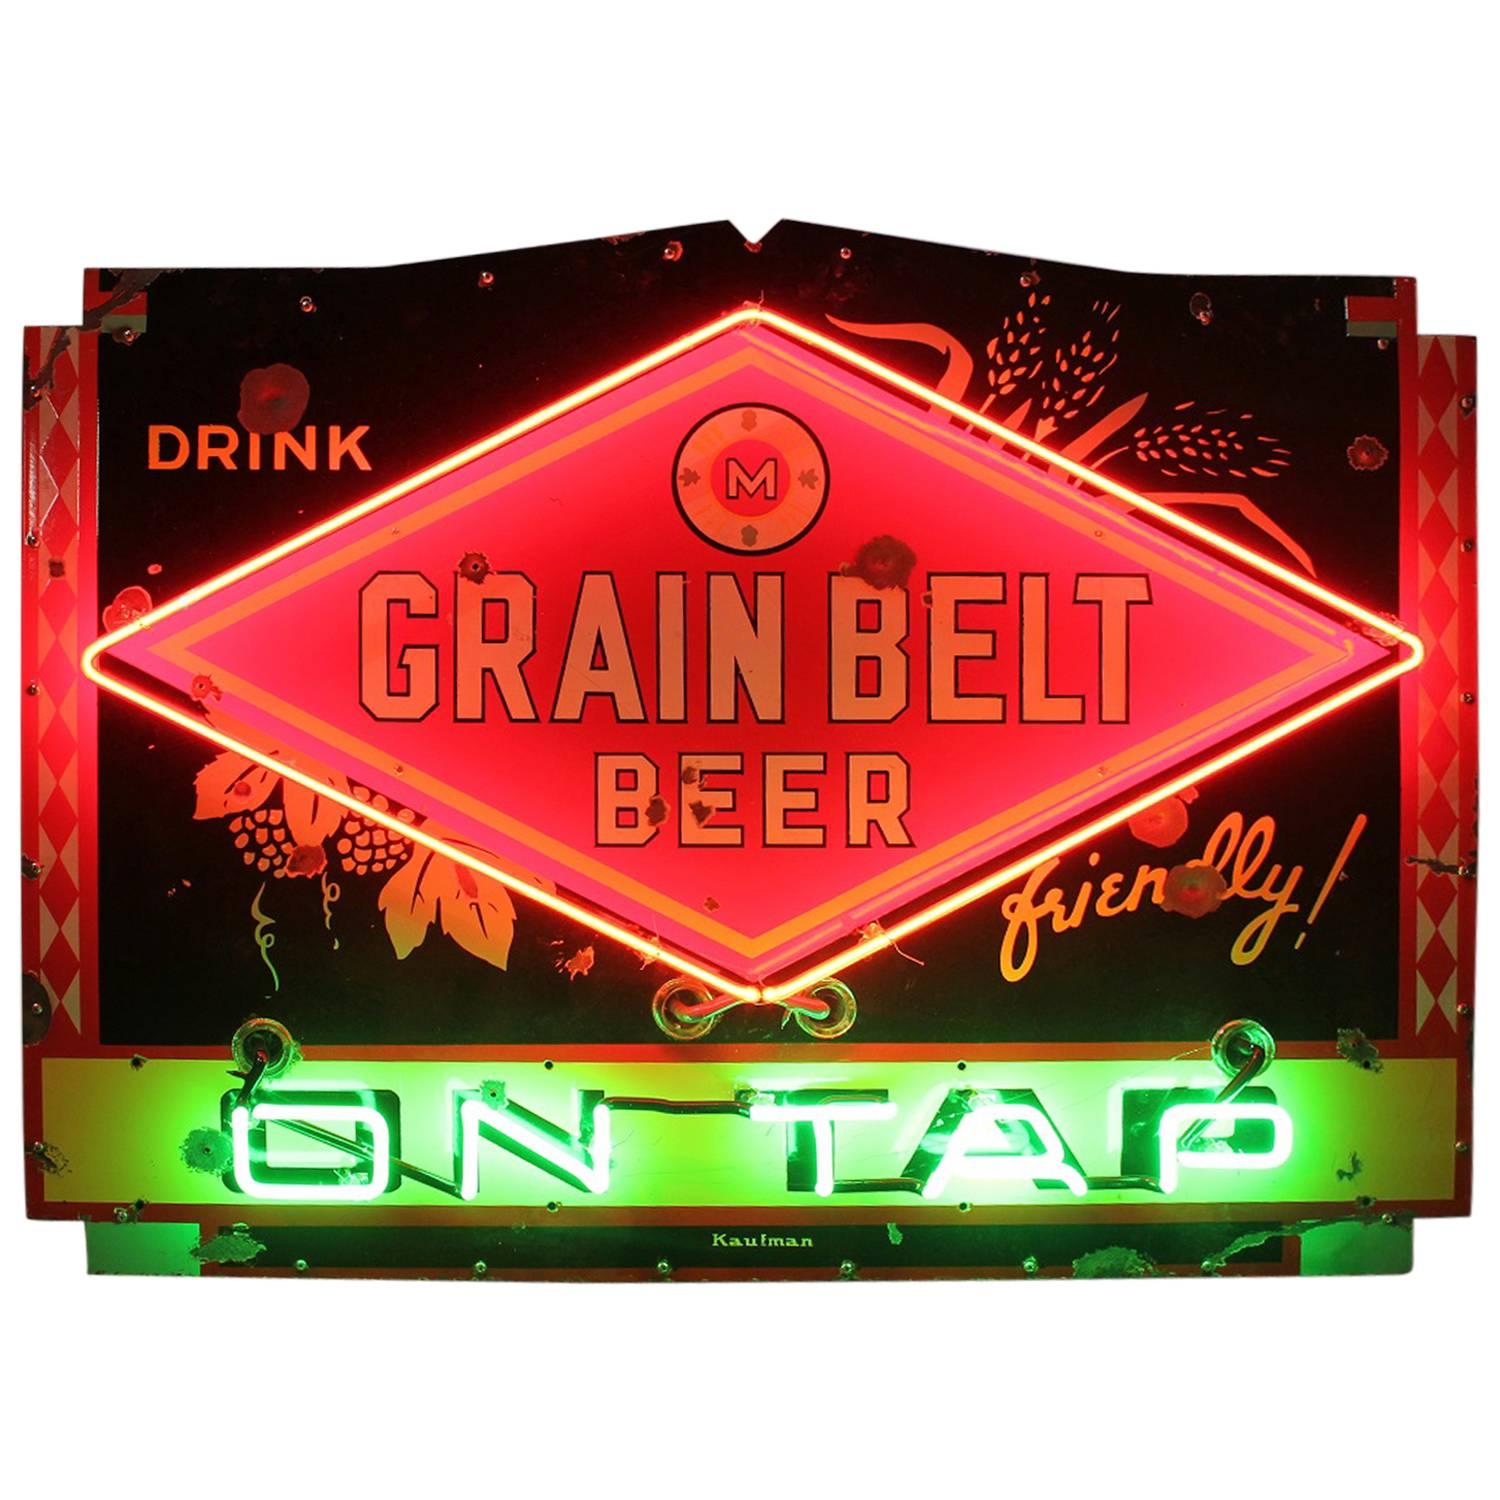 1950s Porcelain Neon Sign "Drink Grain Belt Beer on Tap"